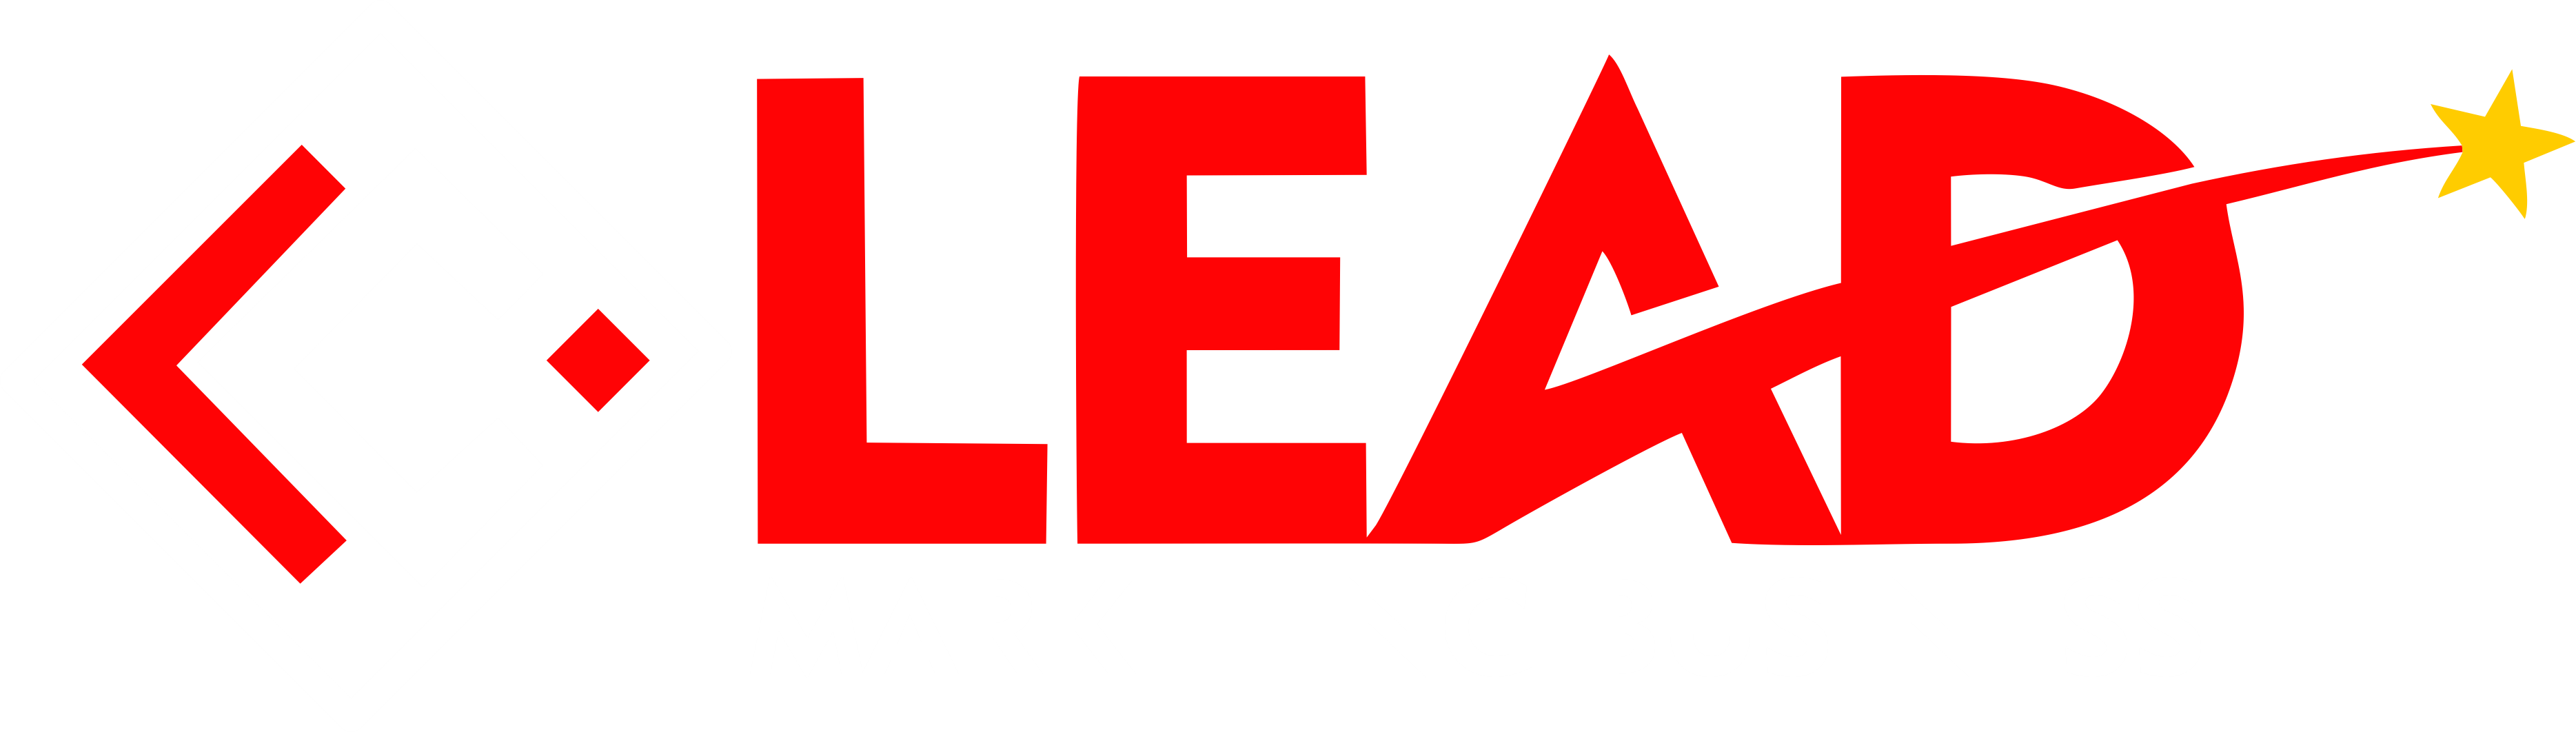 Lead Marketing Business